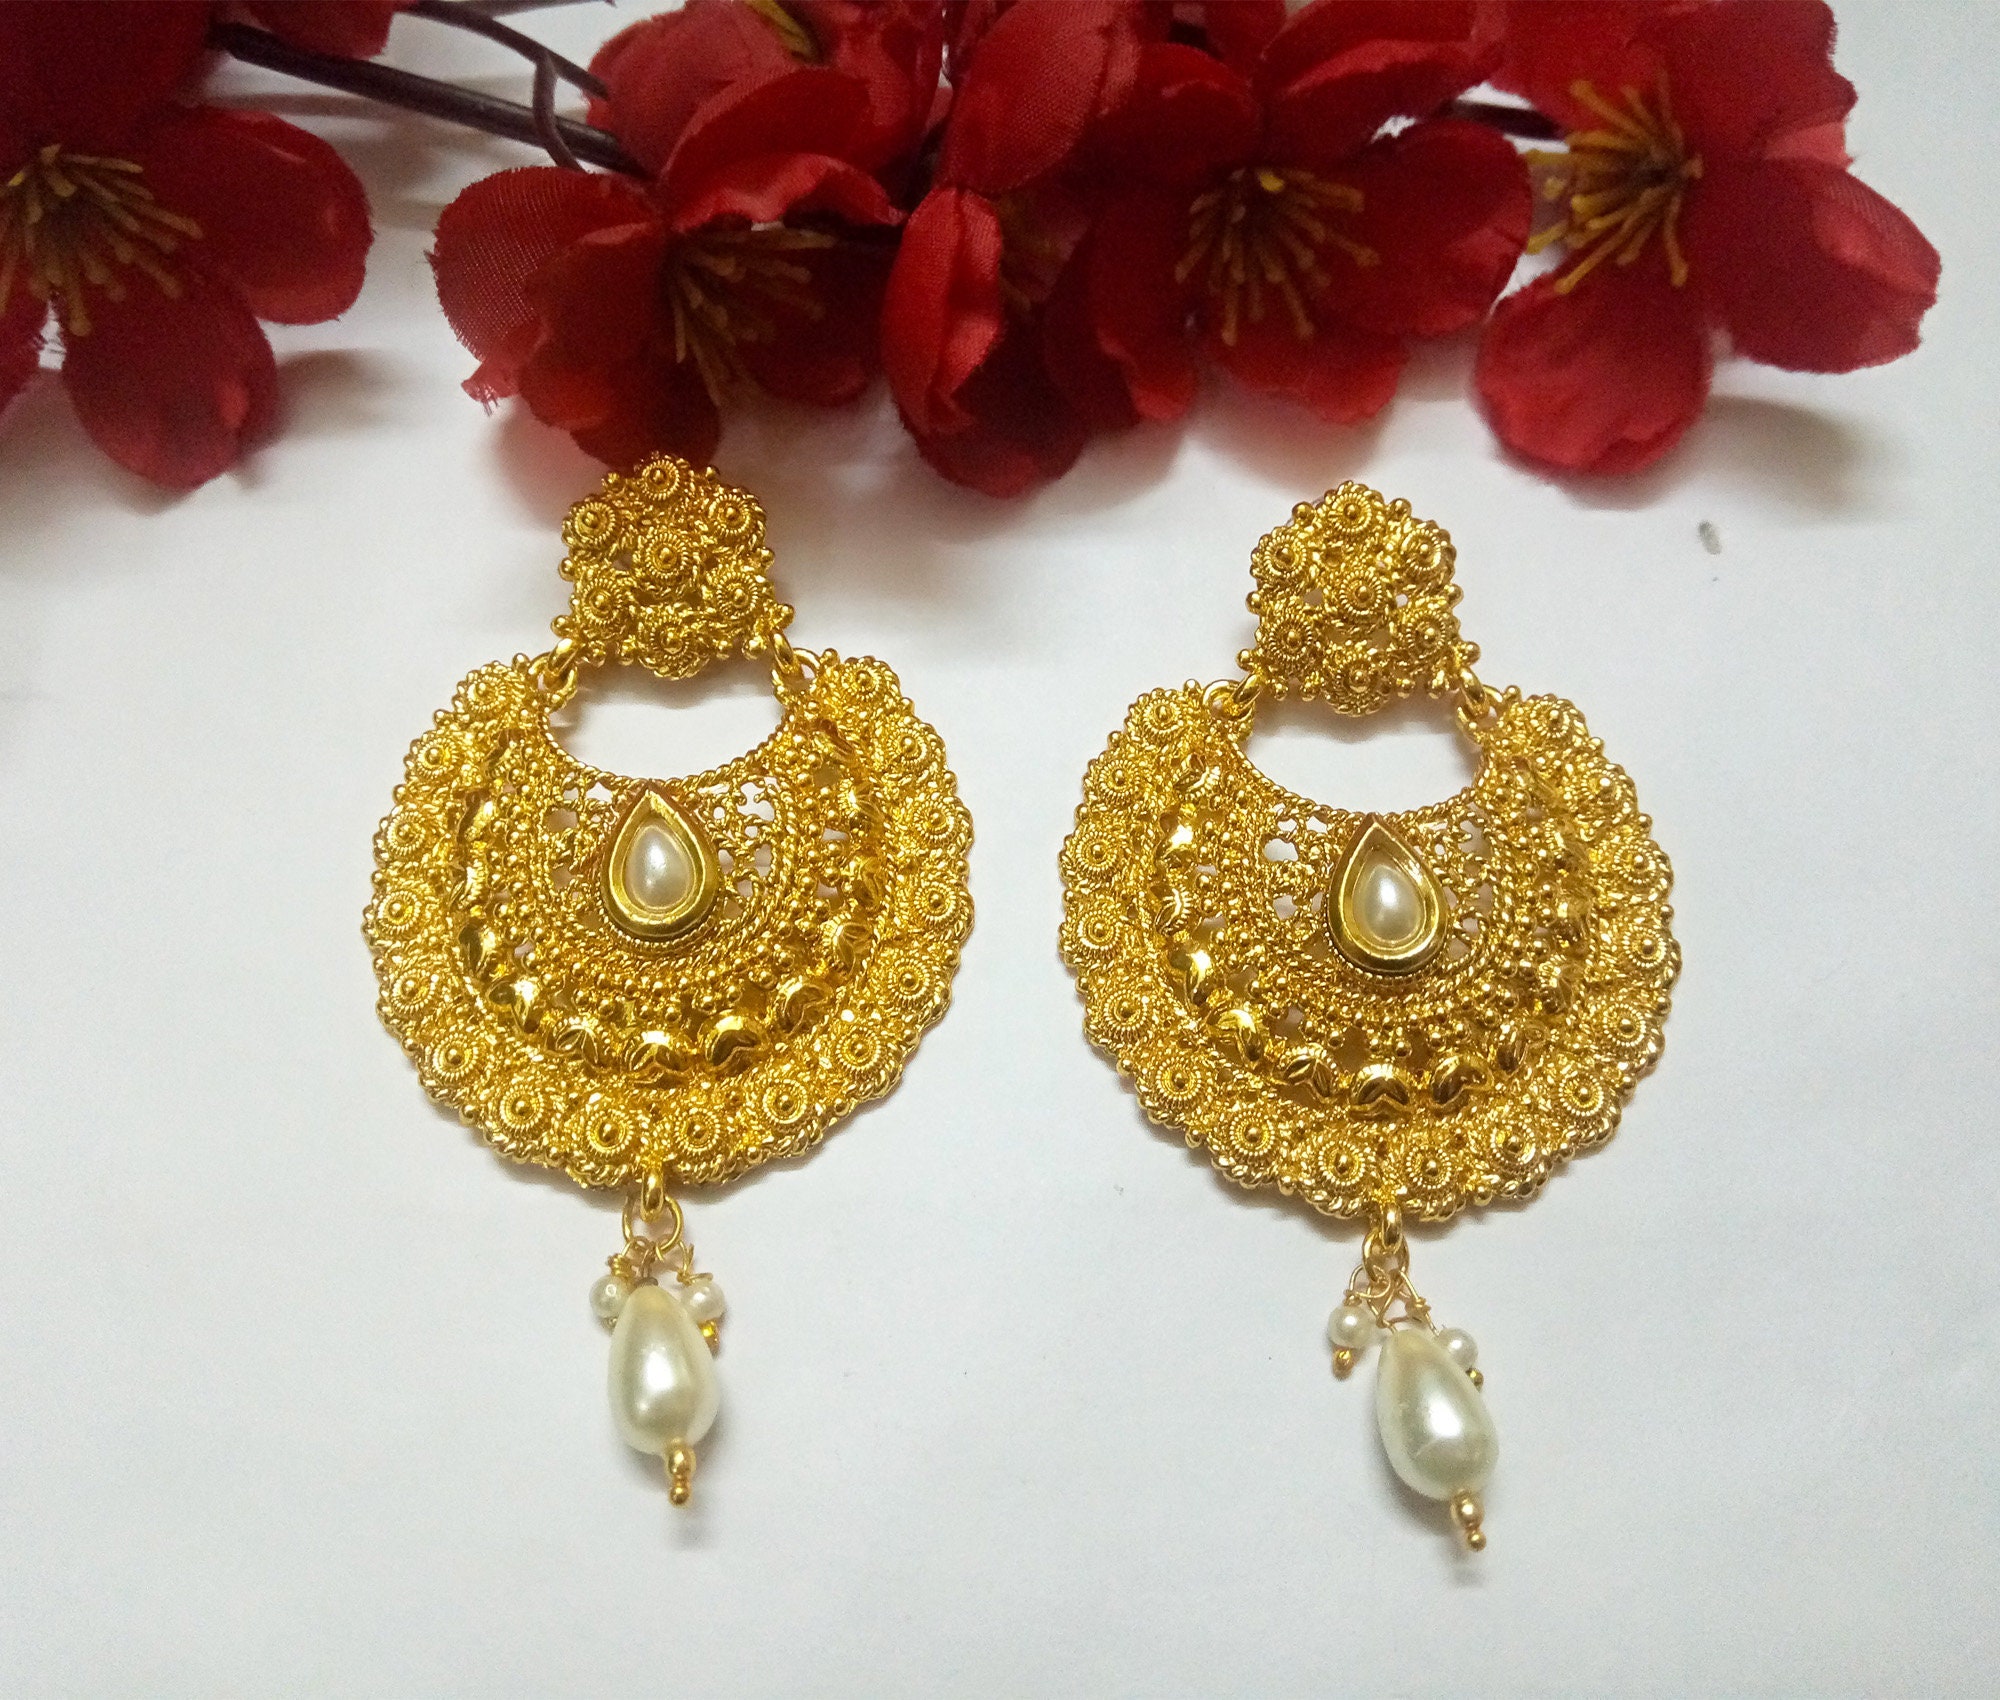 Gold Plated Pearls Earrings Indian Polki Earrings Chand Bali Wedding Bridal Jewelry Party Wear Handmade Fashion Jewelry Pakistani Jewelry